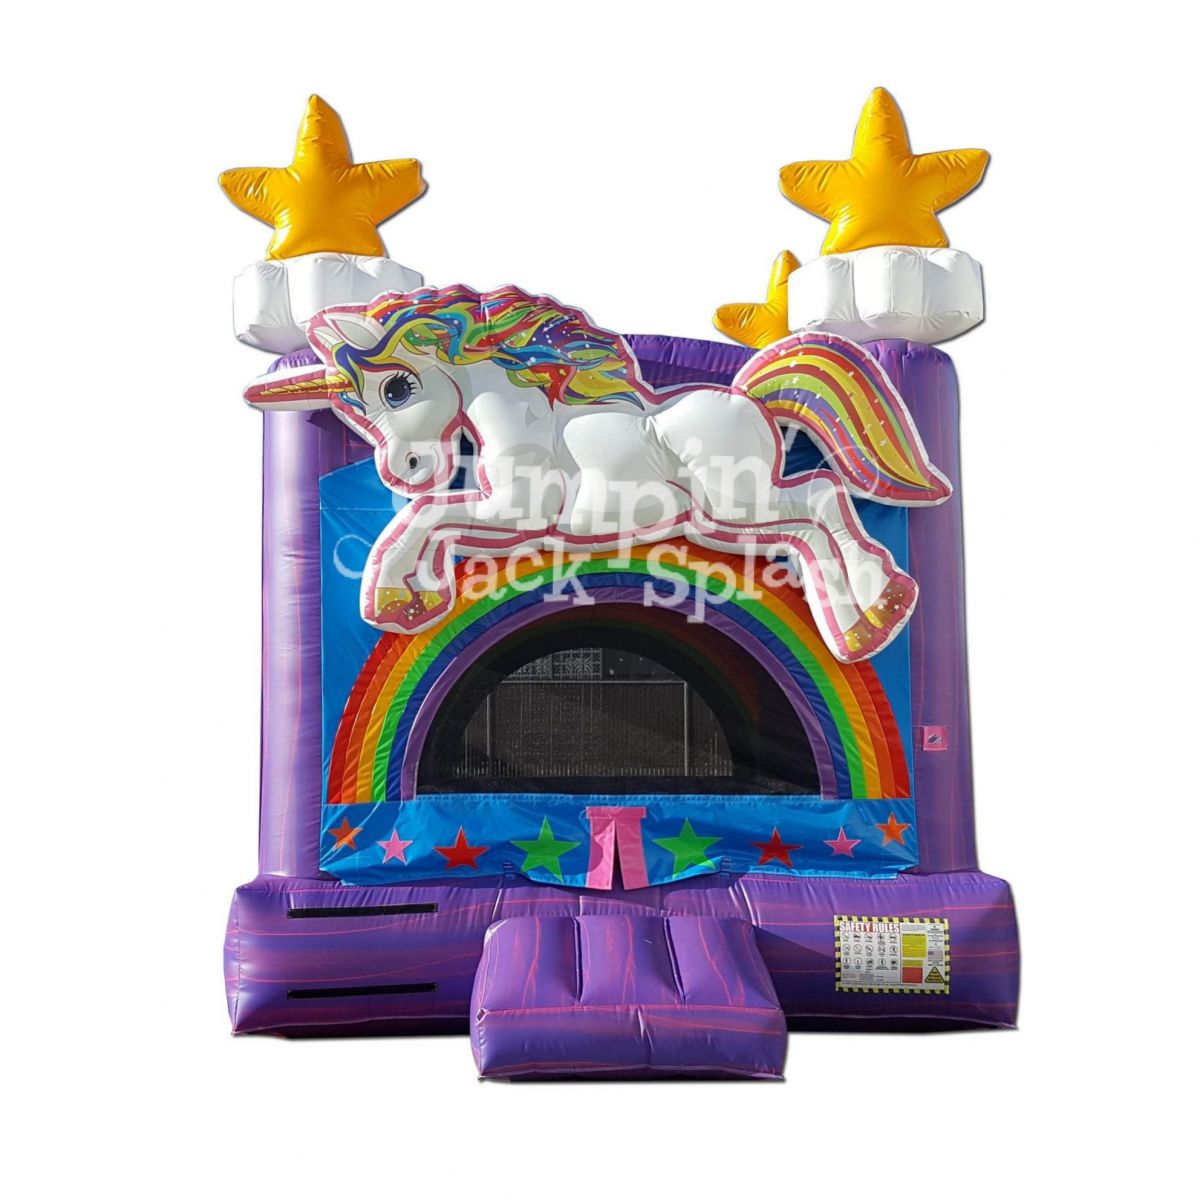 Jumpin Jack Splash Unicorn Bounce House